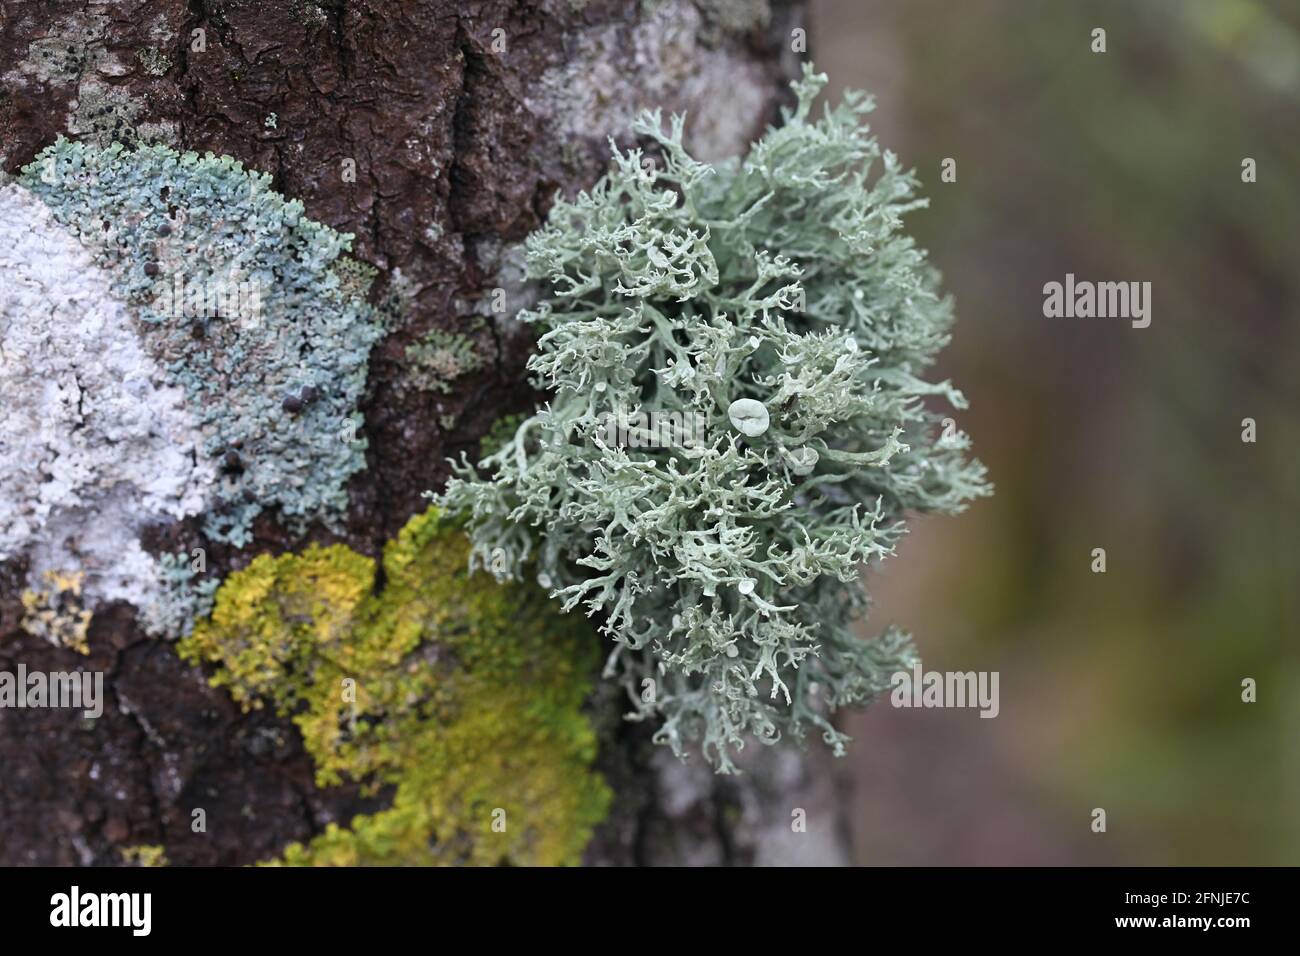 Ramalina fastigiata, an epiphytic lichen growing on aspen tree in Finland Stock Photo